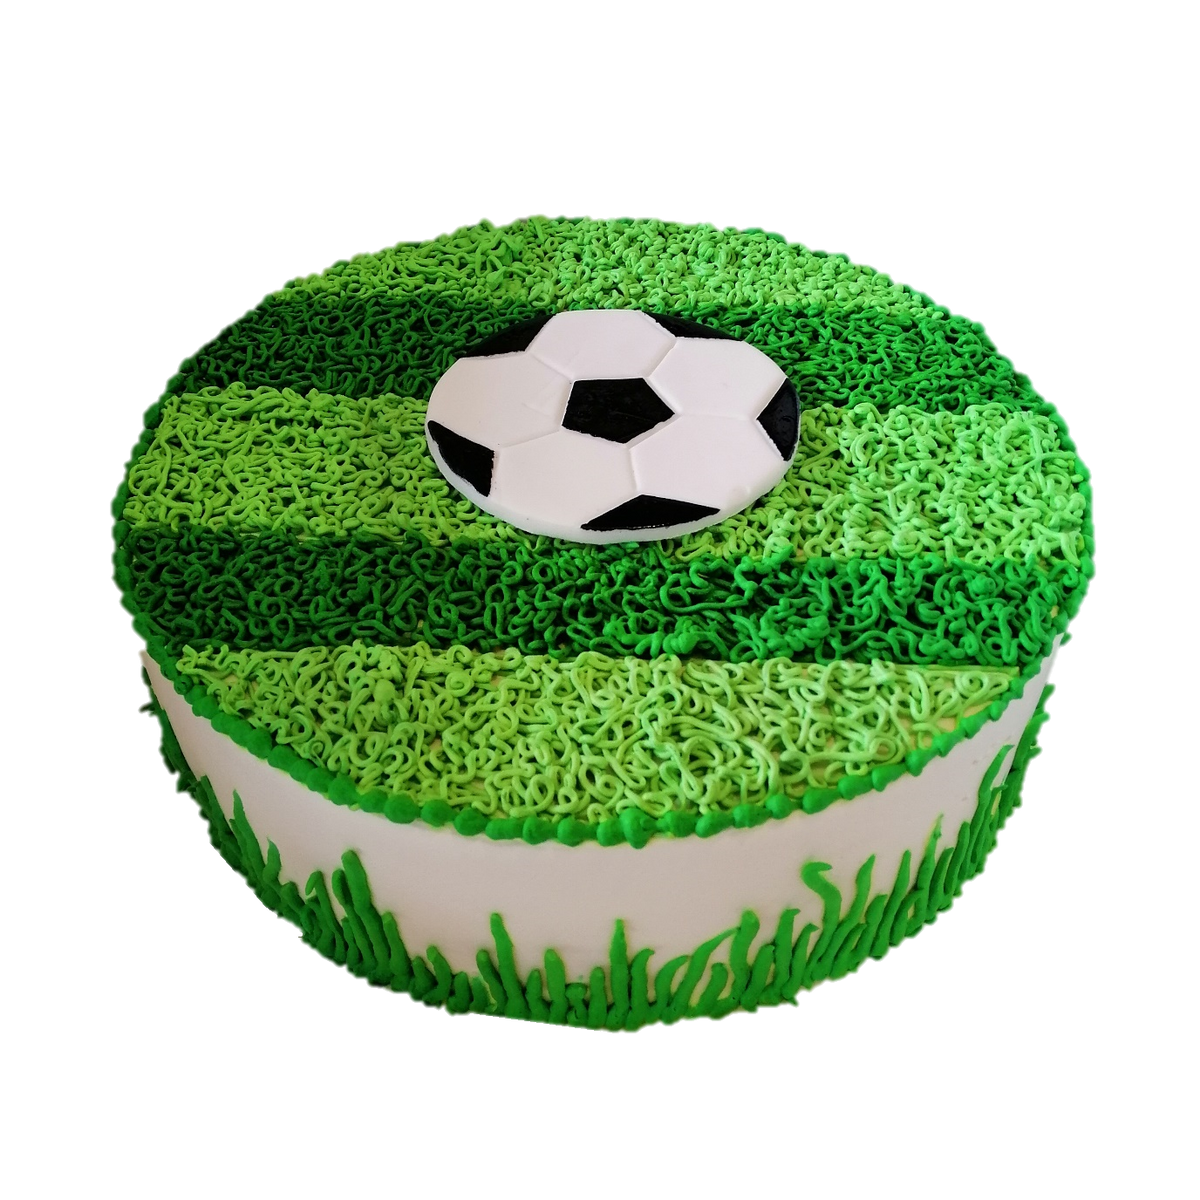 4pcs足球翻糖蛋糕印花模 球场球员世界杯主图蛋糕装饰 OPP简装-阿里巴巴